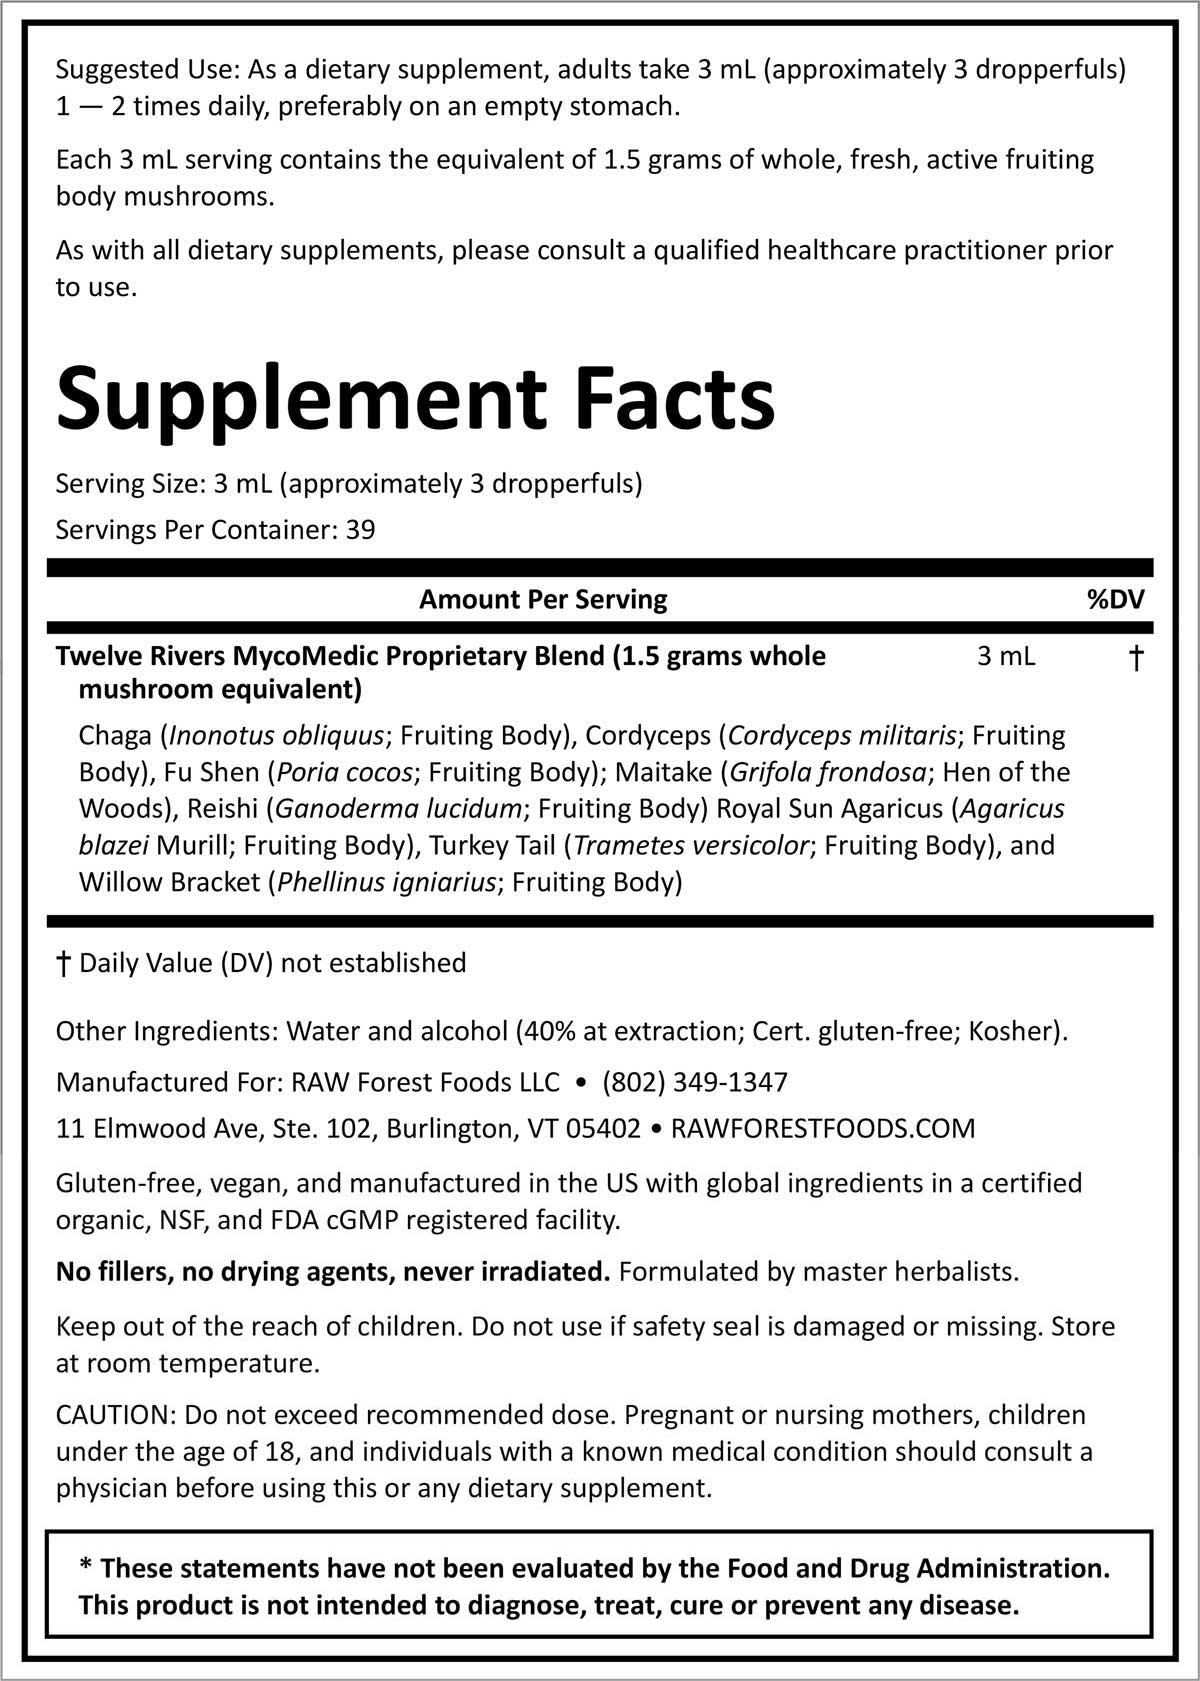 Twelve Rivers MycoMedic Tincture Supplement Facts 4 Ounce Bottle